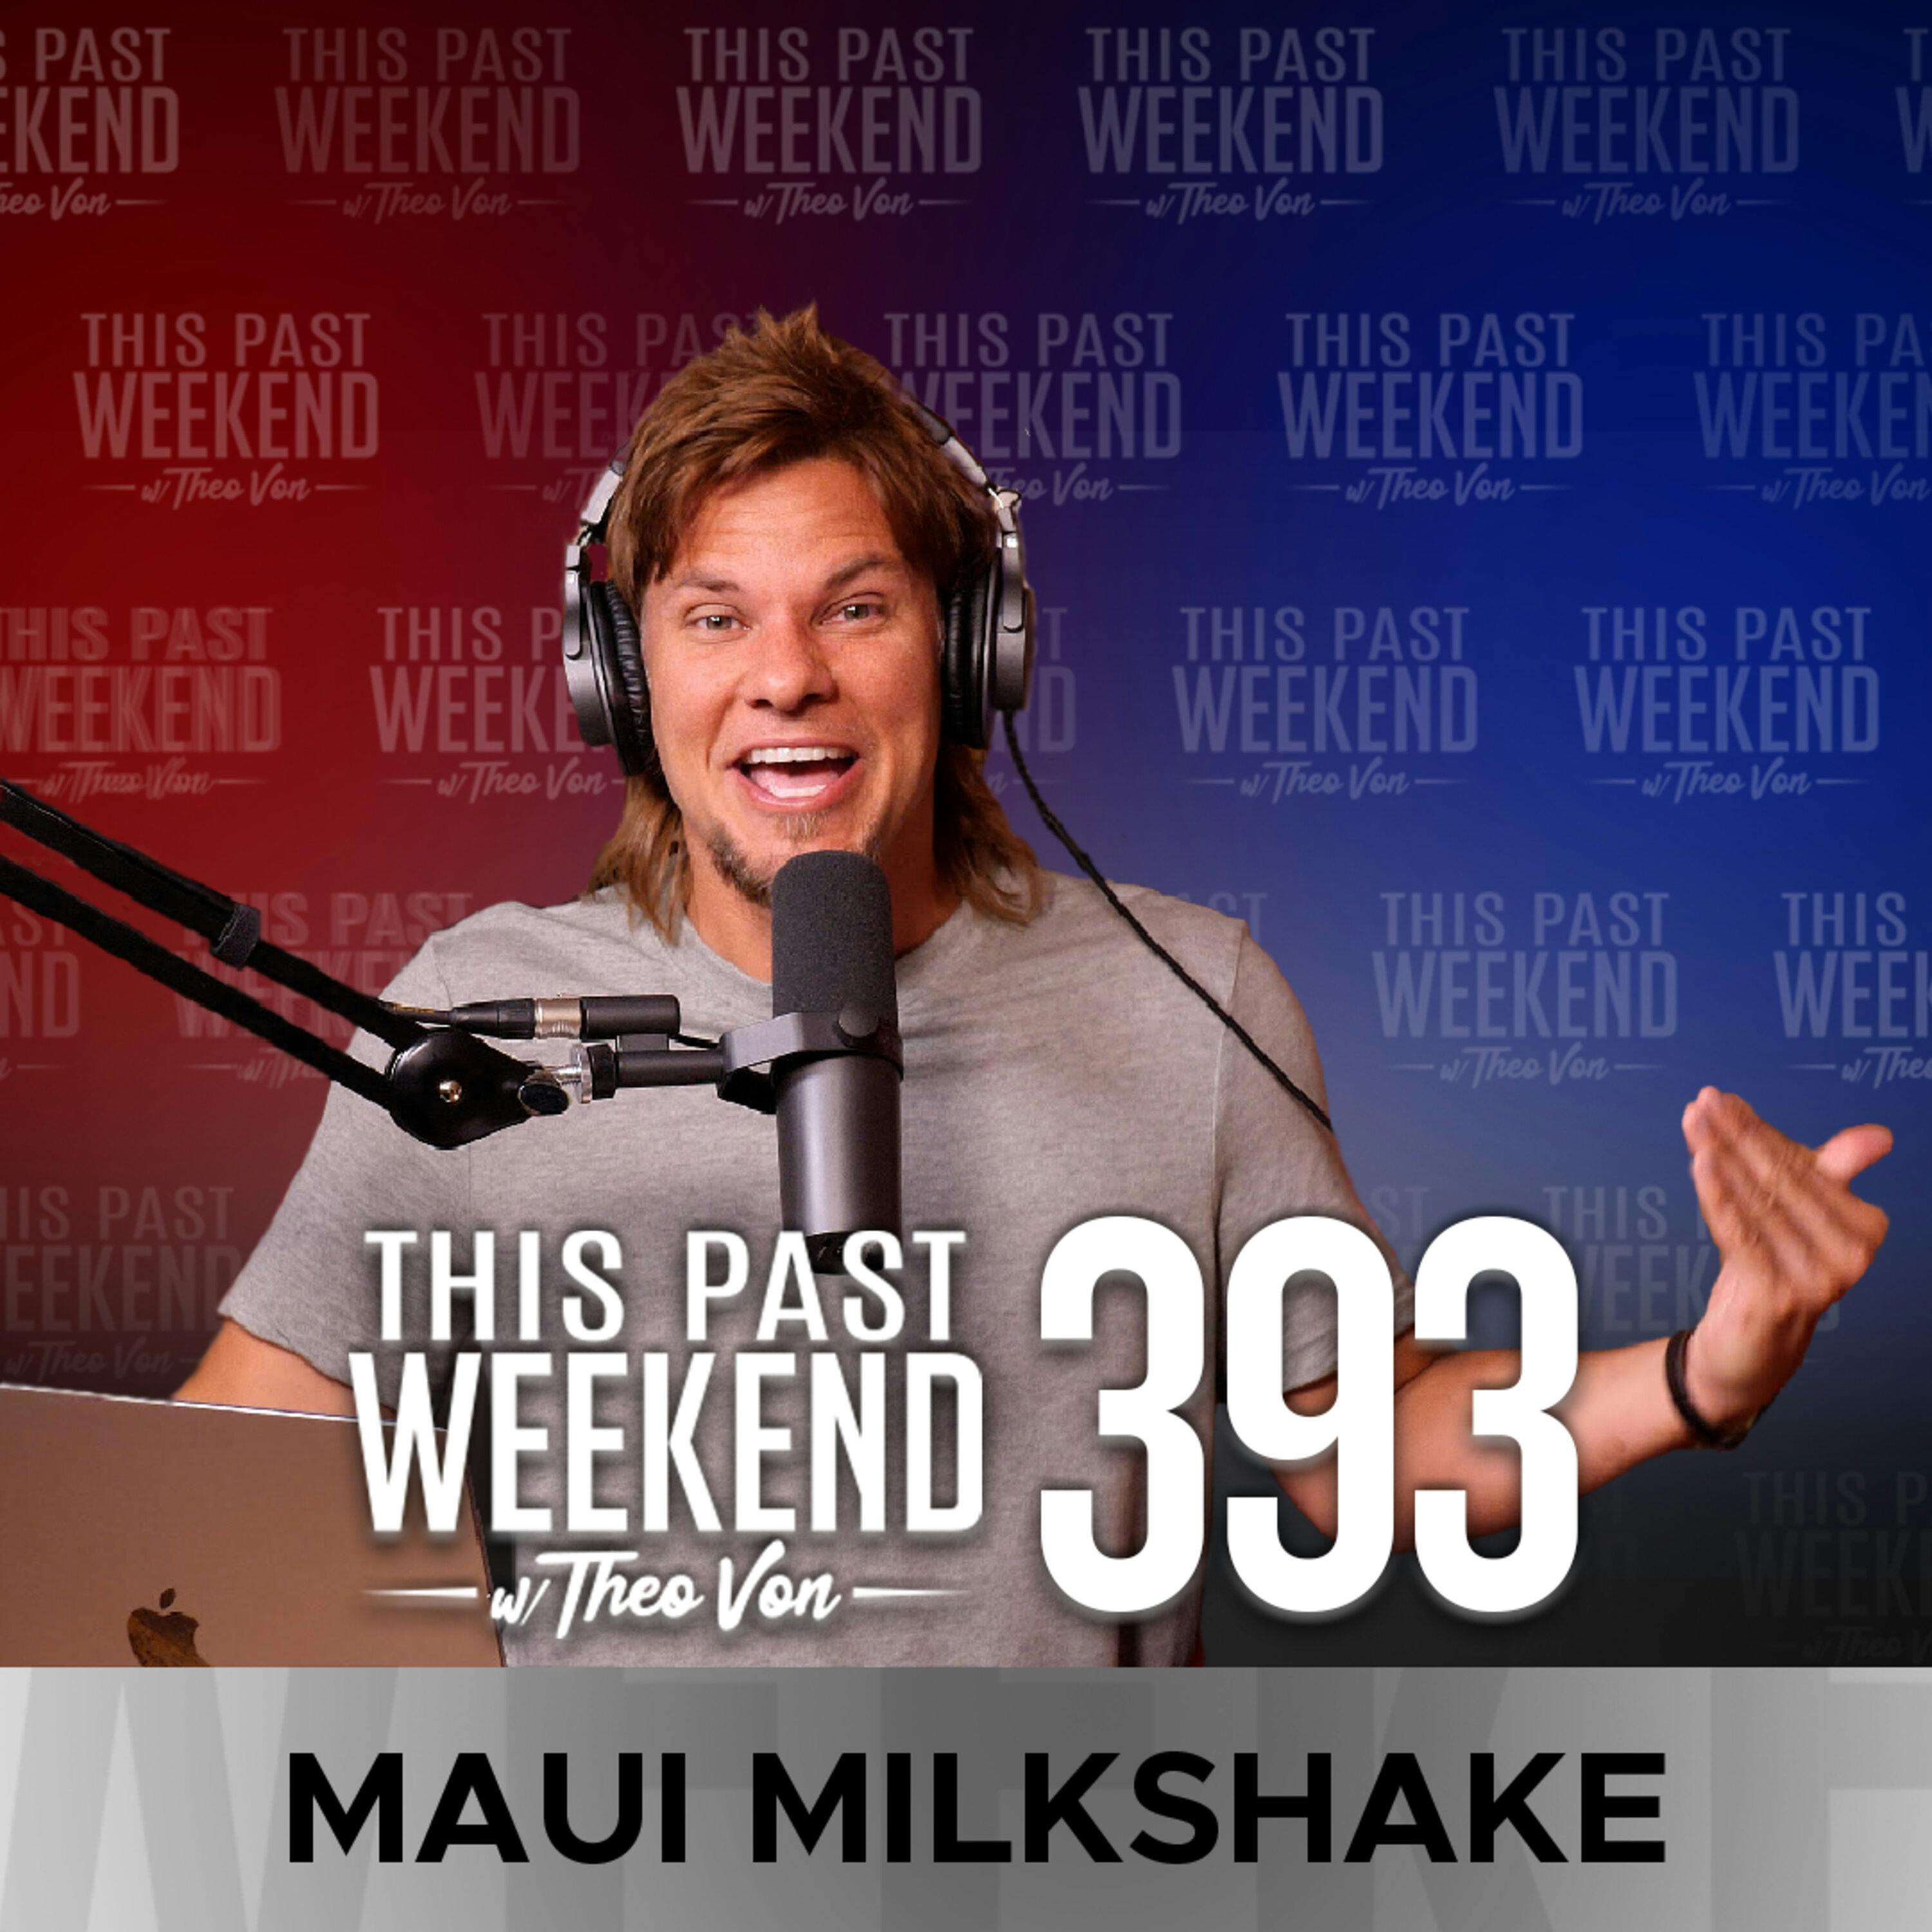 E393 Maui Milkshake by Theo Von